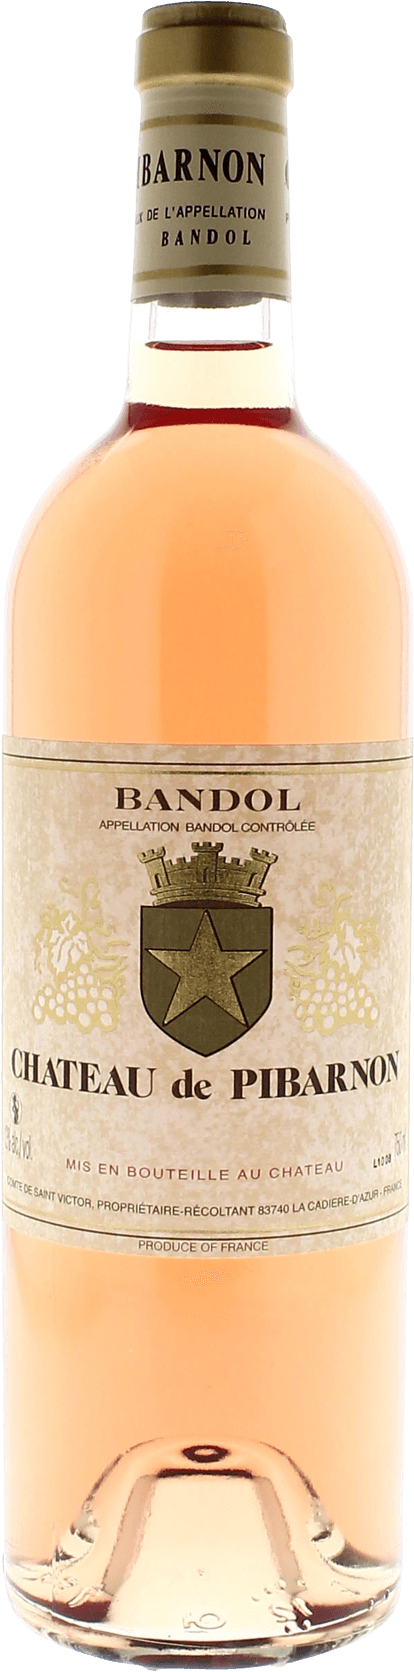 Bandol domaine de pibarnon ros 2018  Bandol, Slection provence rouge